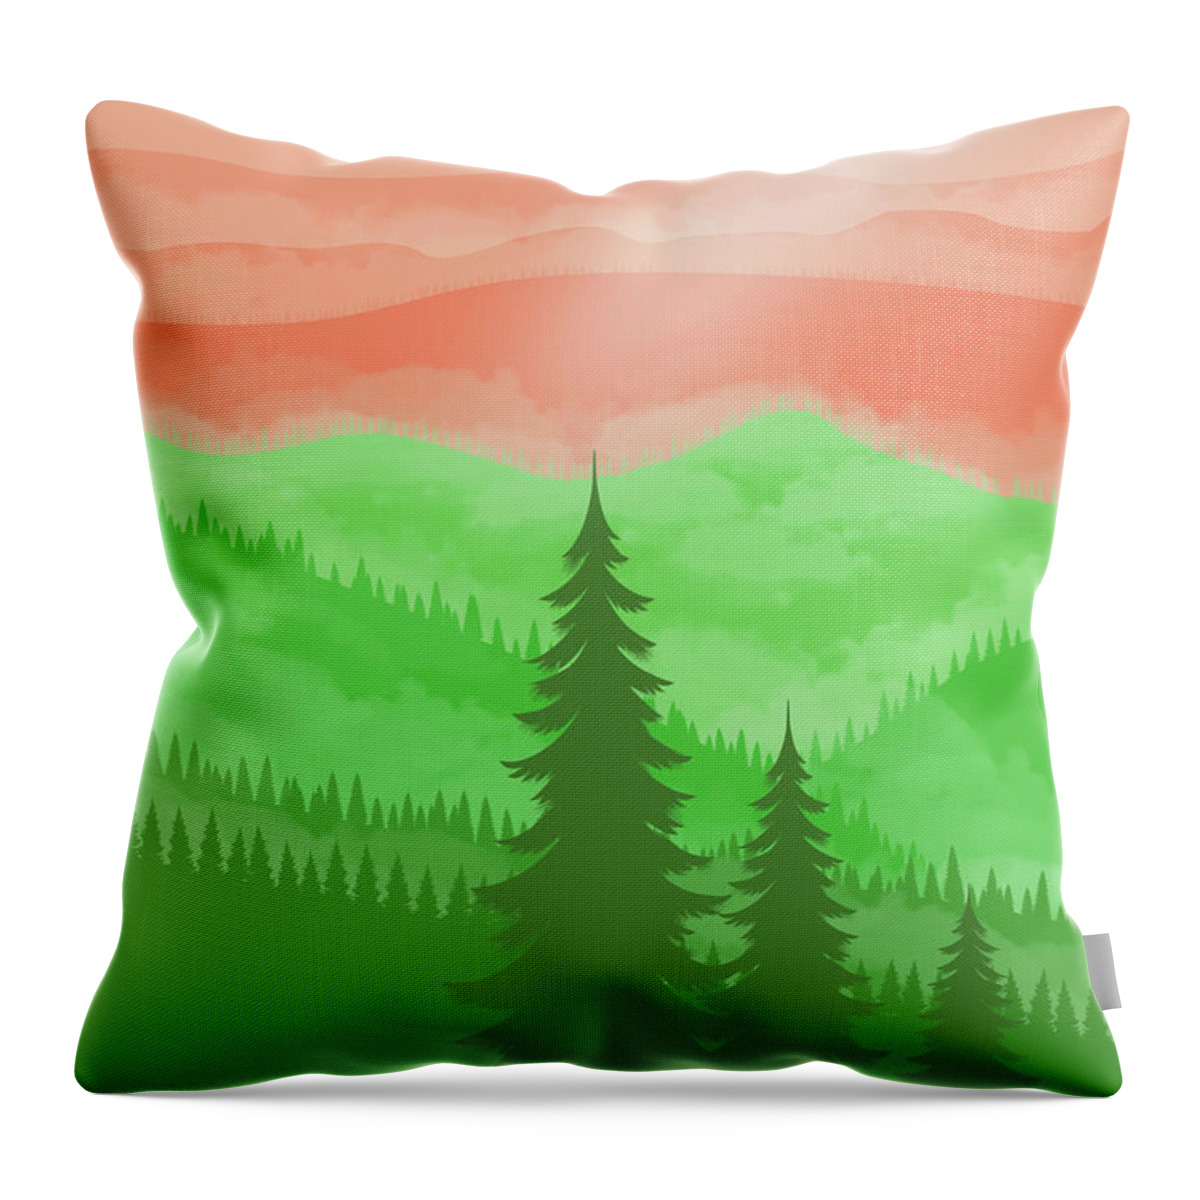 Orange Throw Pillow featuring the digital art Orange Sky Mountain by Sambel Pedes